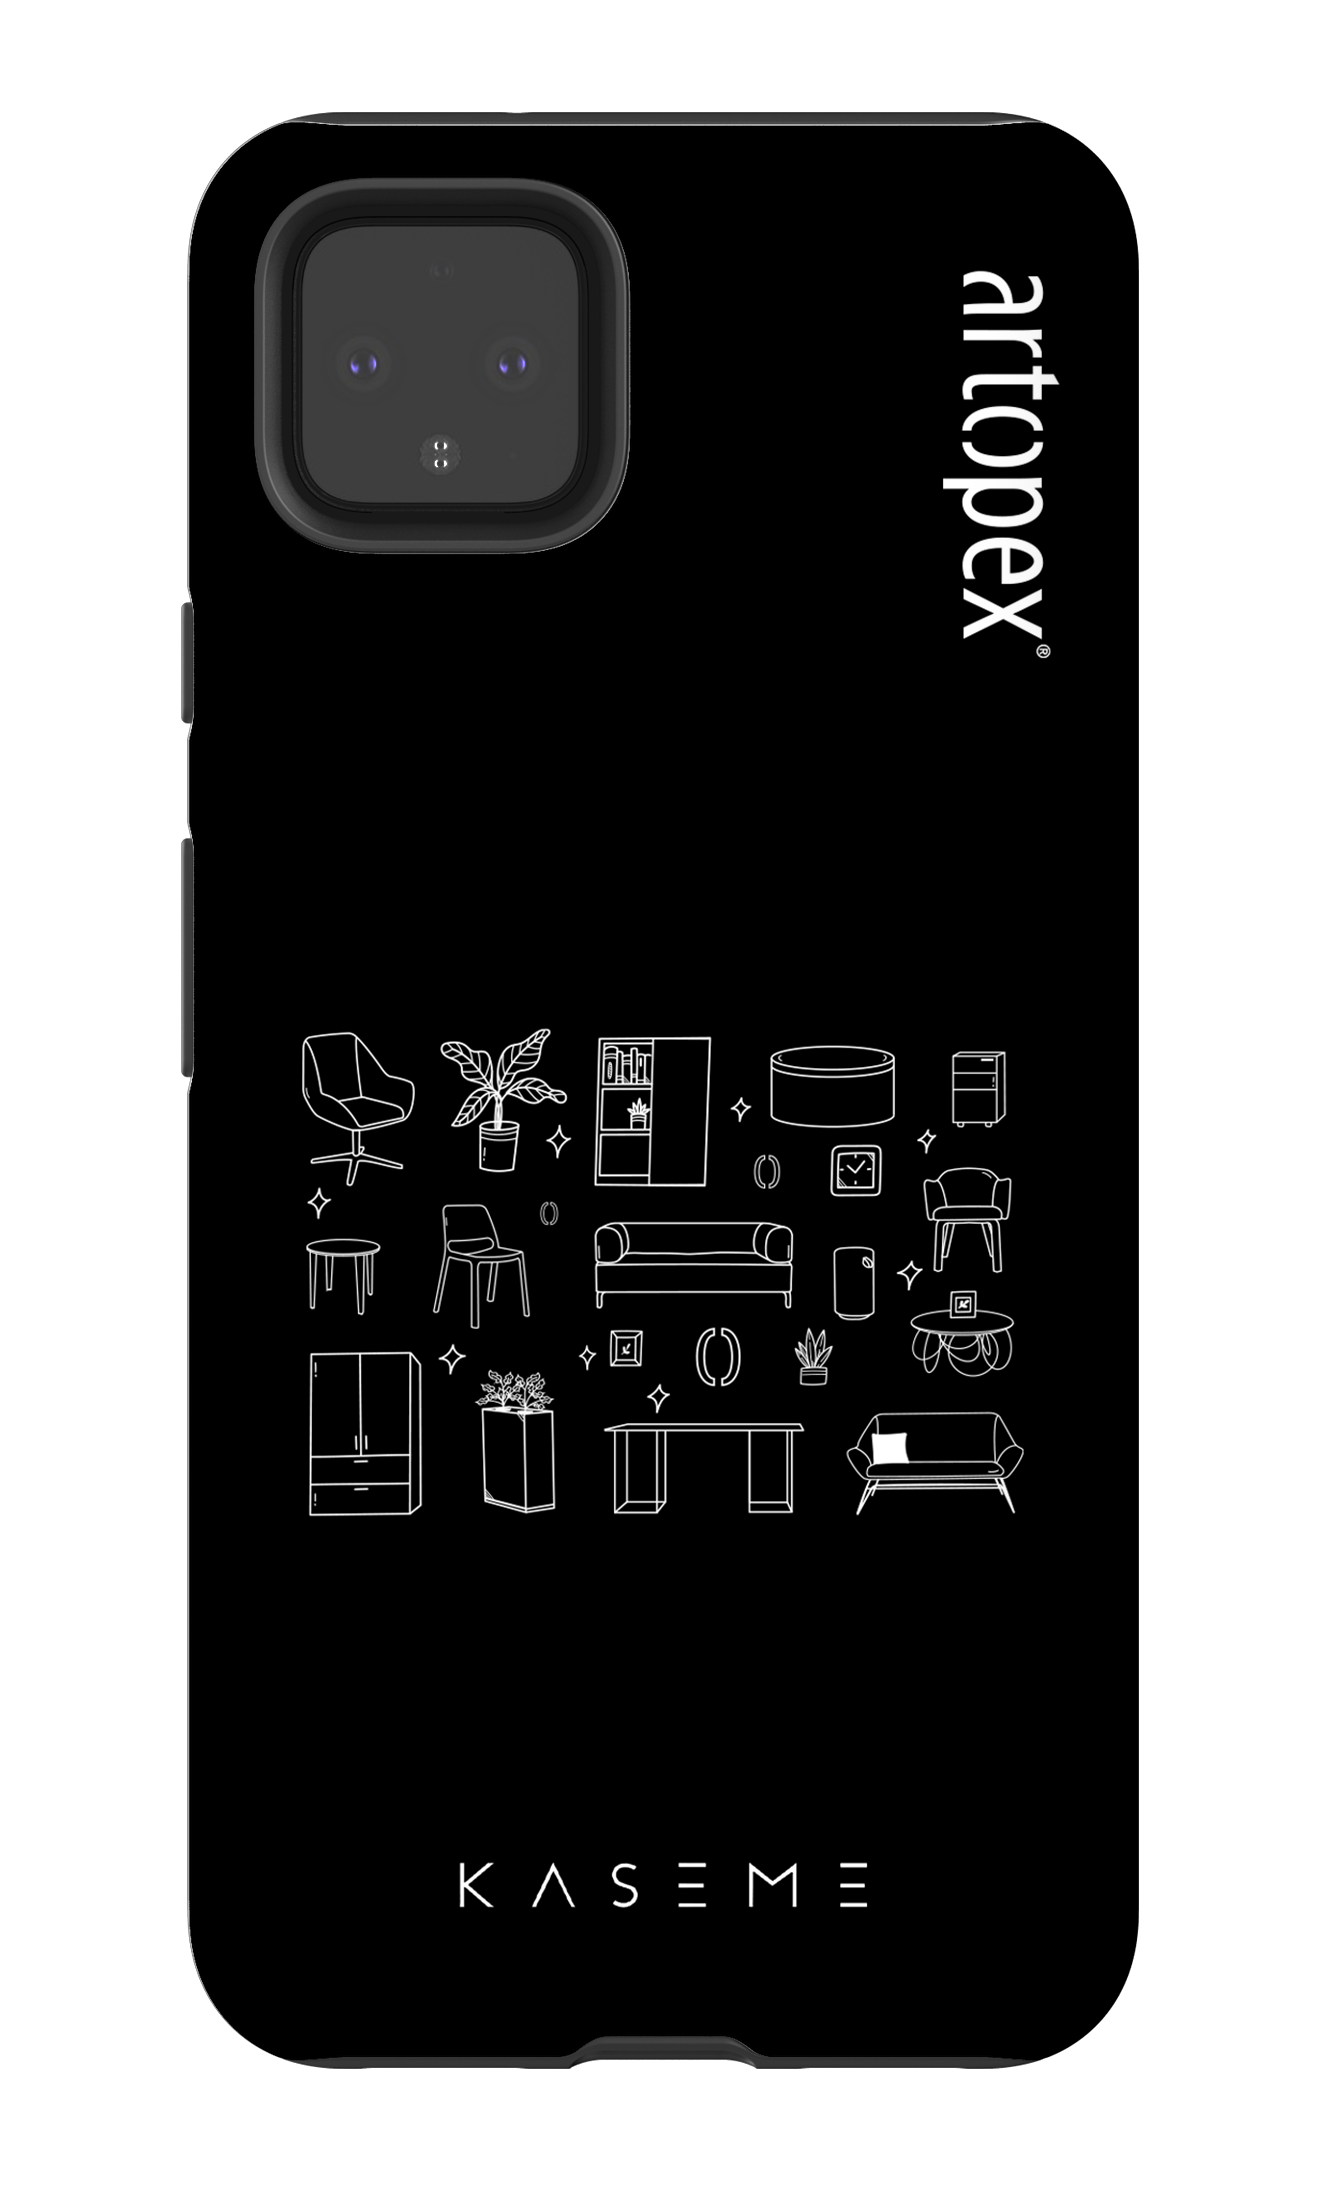 L'essentiel noir par Artopex - Google Pixel 4 XL